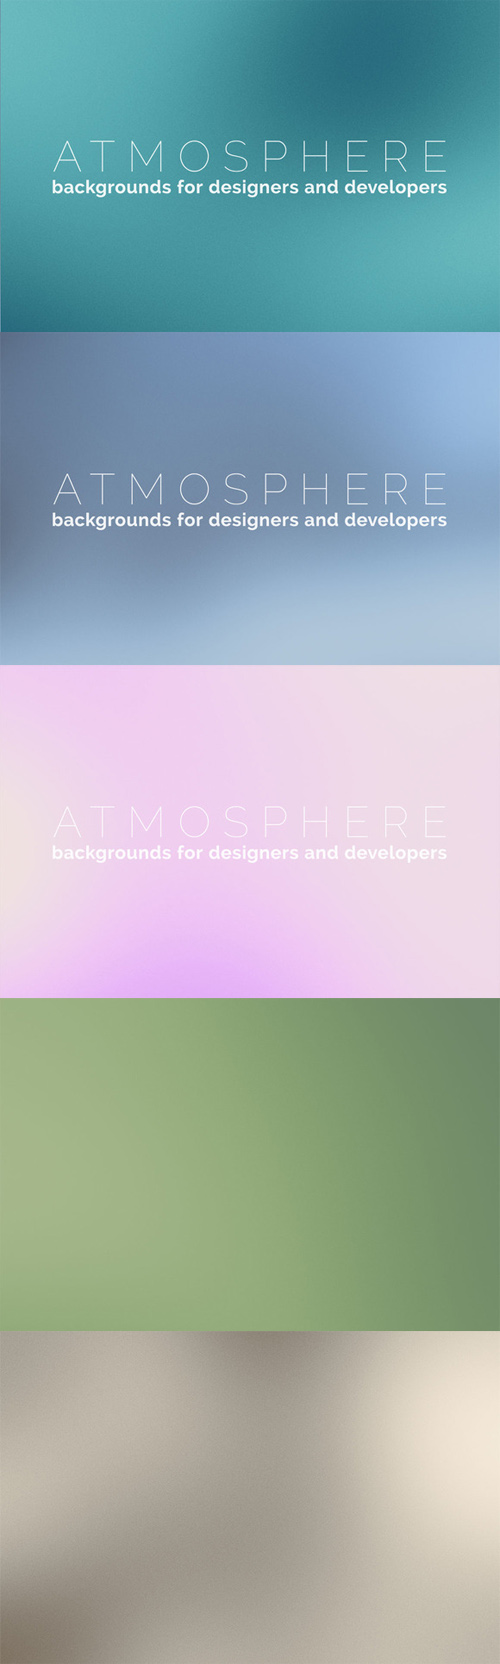 CreativeMarket - Atmosphere Background Pack 7964